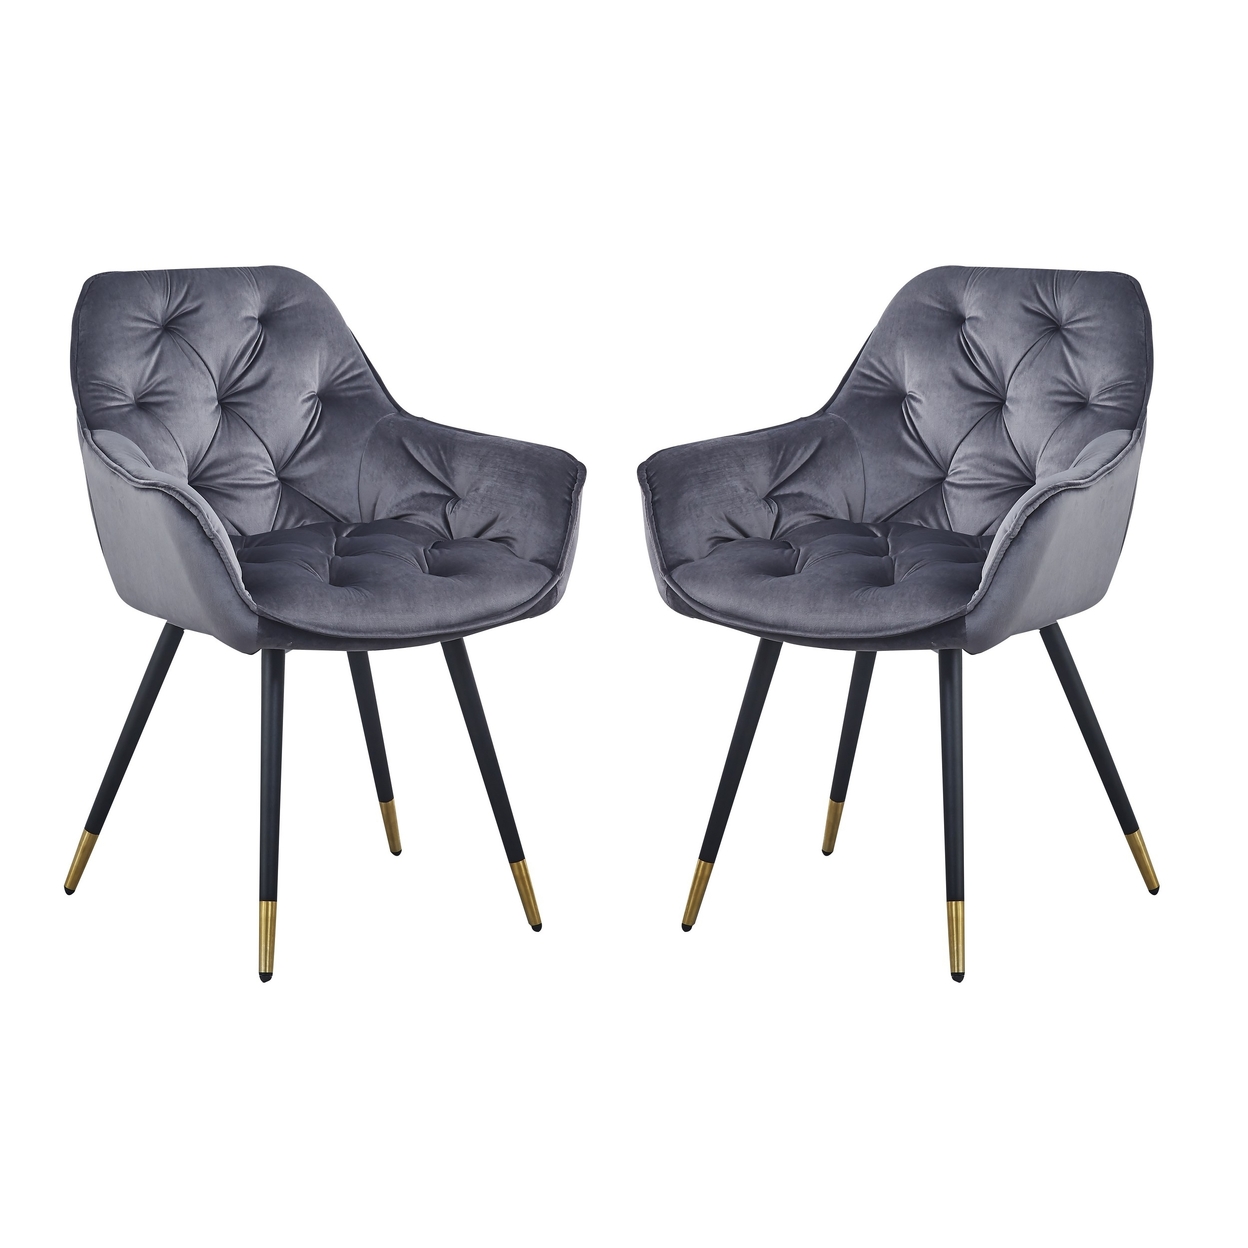 Alix 25 Inch Modern Dining Chair, Button Tufted, Set Of 2, Gray, Black- Saltoro Sherpi